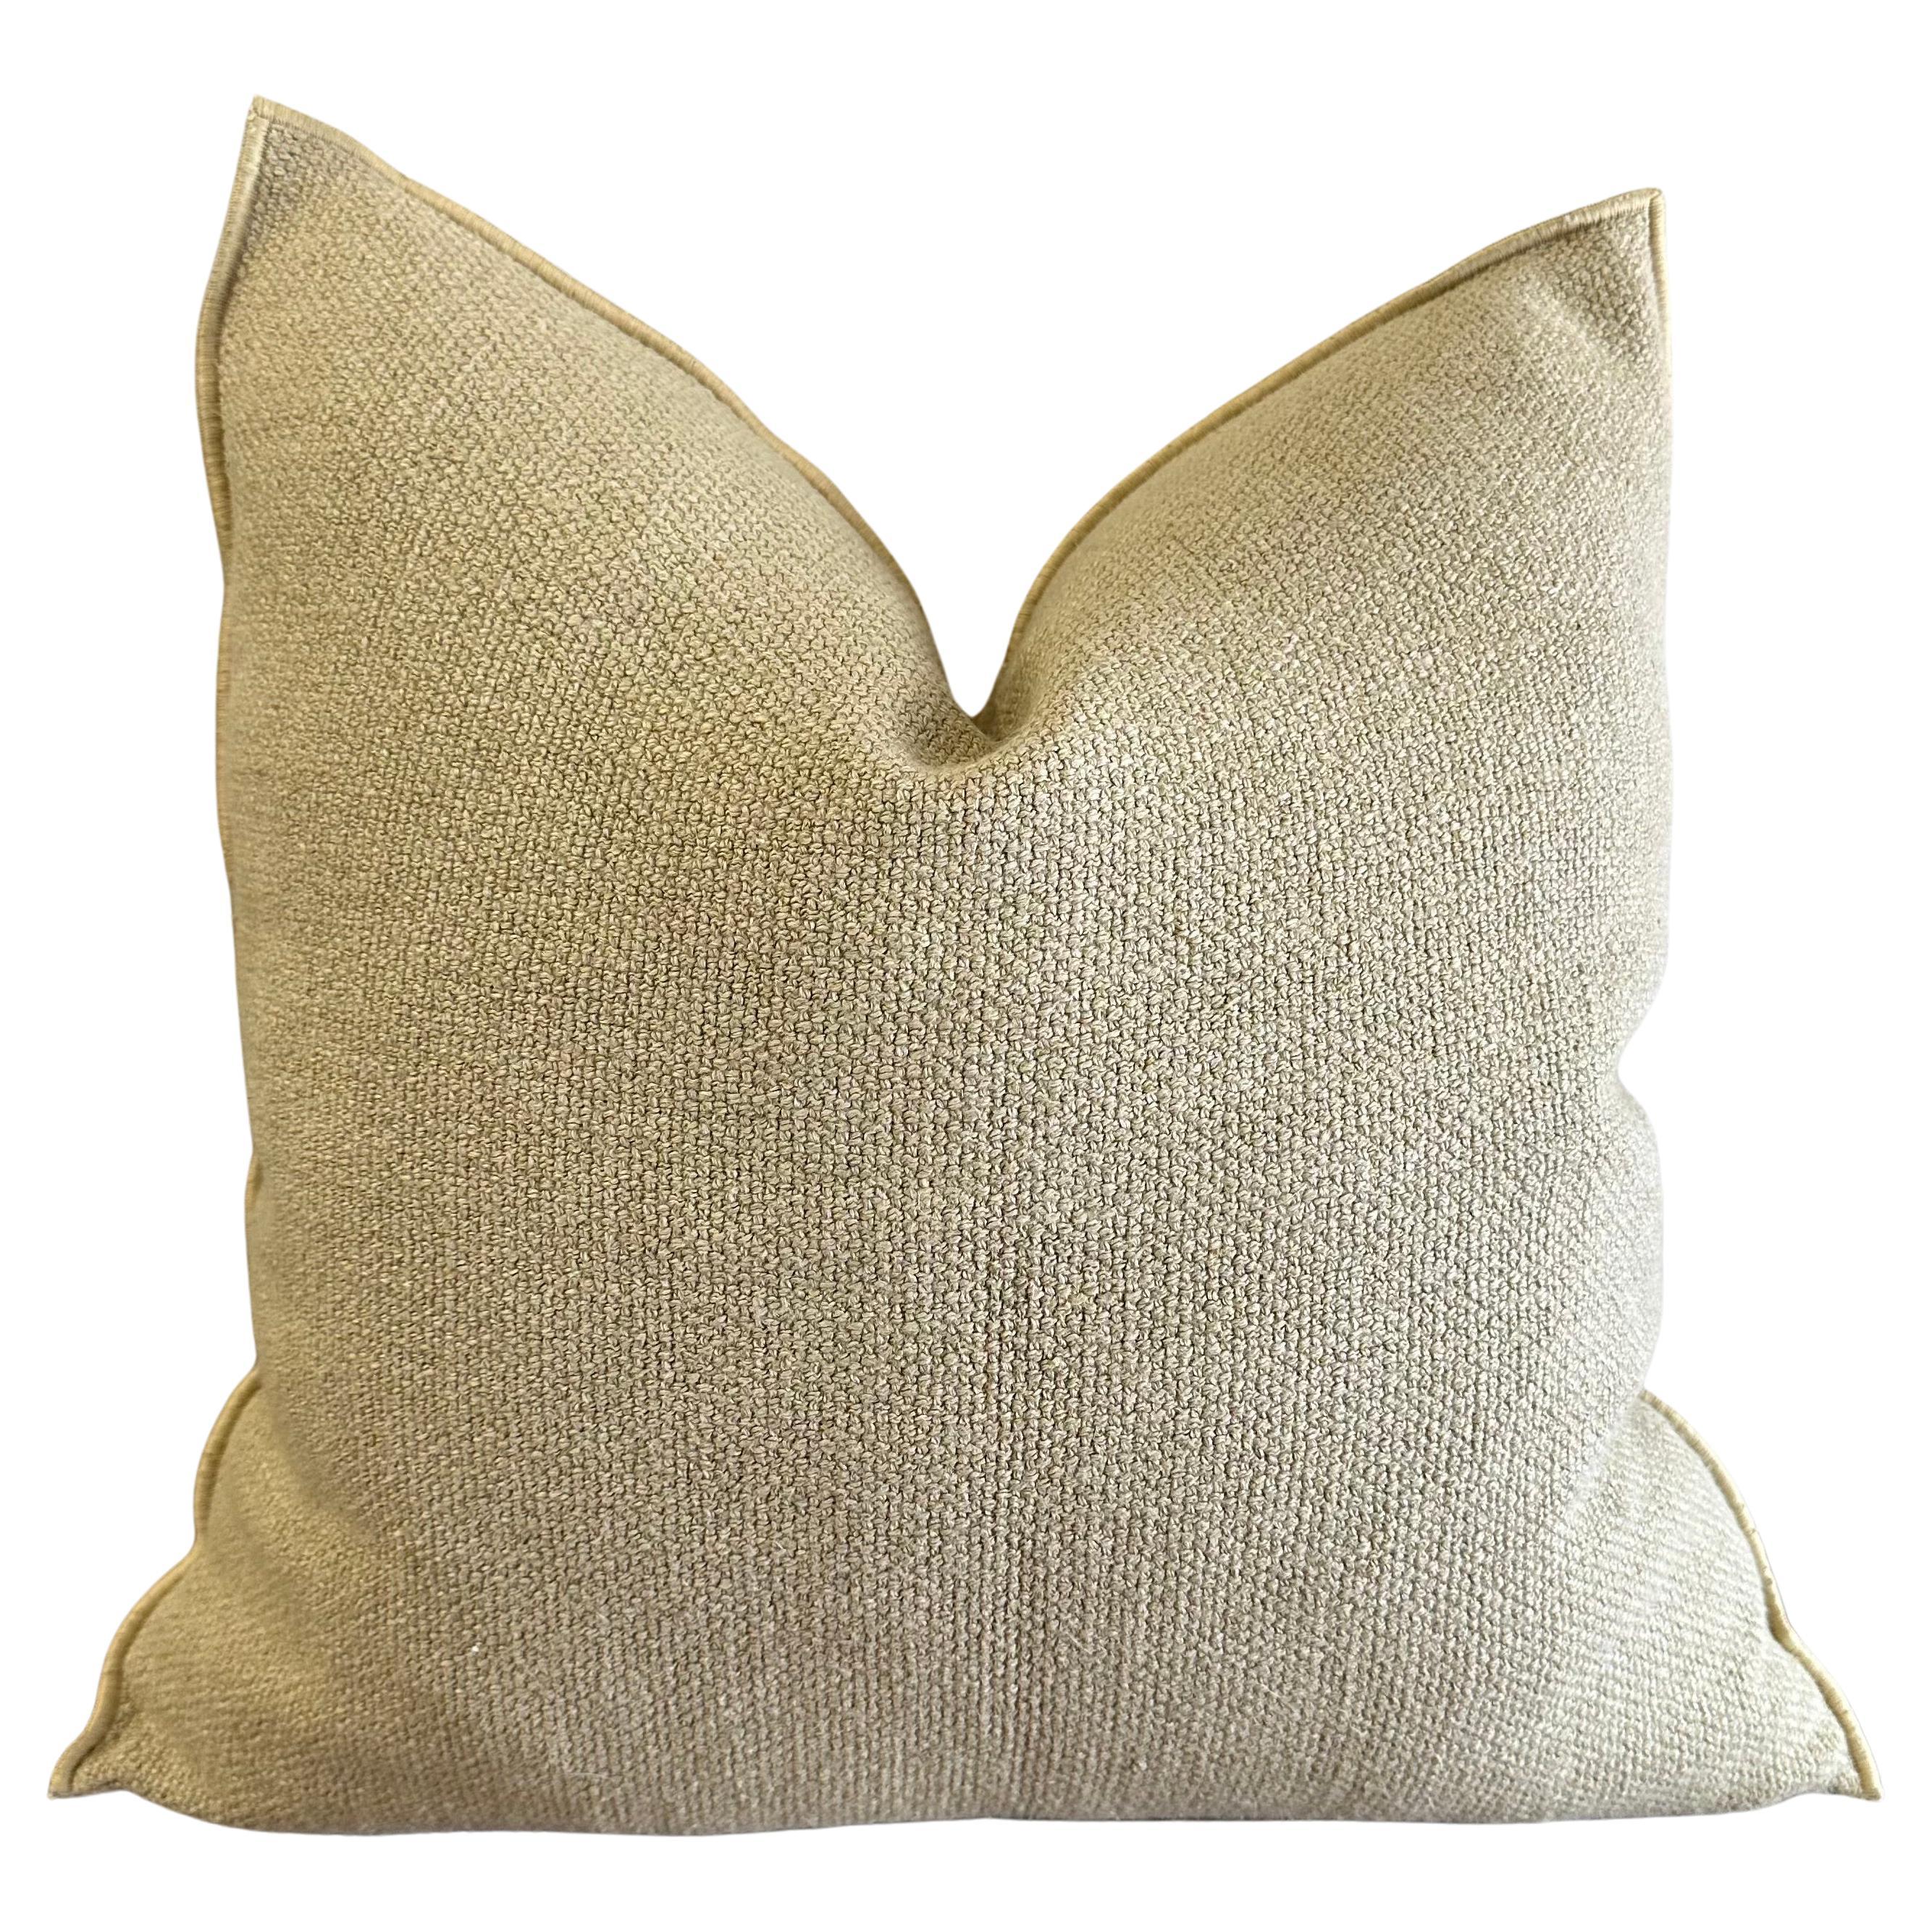 Fromentera French Linen Accent Pillow